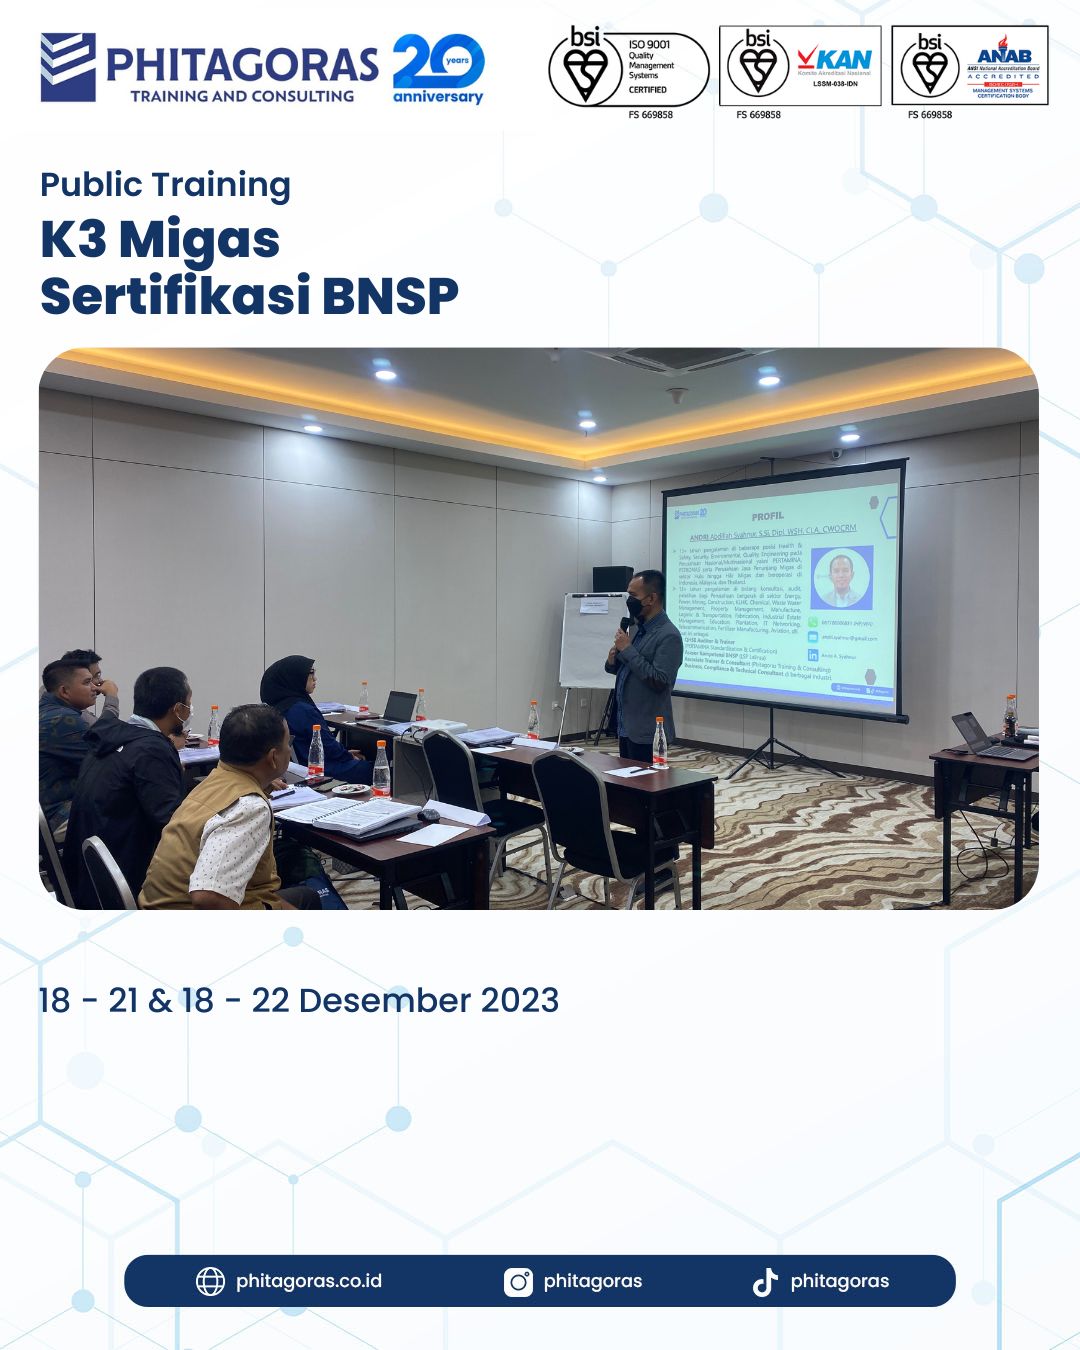 Public Training K3 MIGAS Sertifikasi BNSP